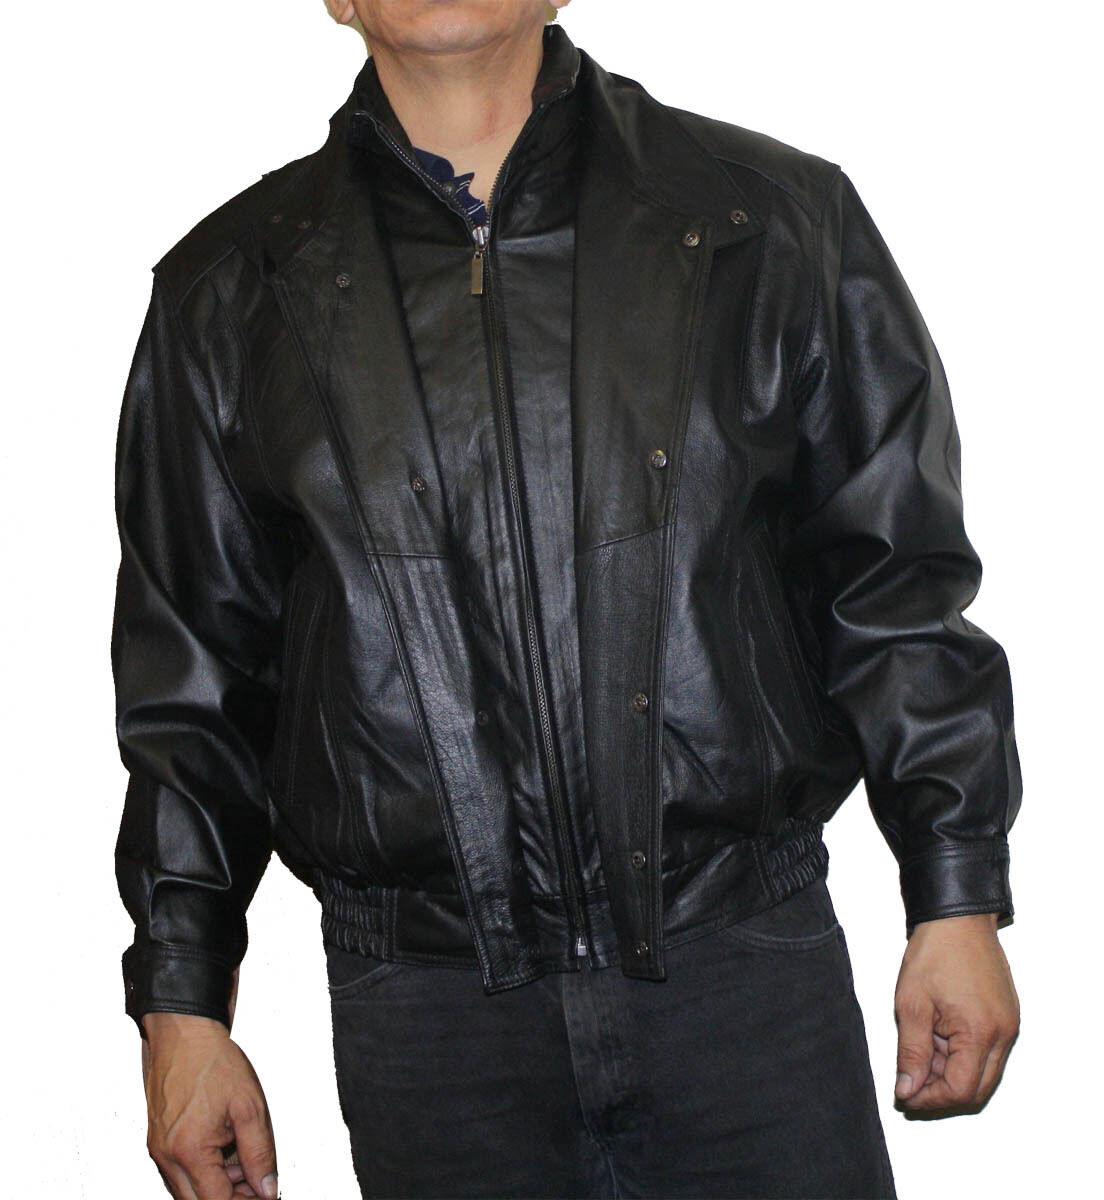 Men's Leather Jacket Double Breast Bomber Jacket